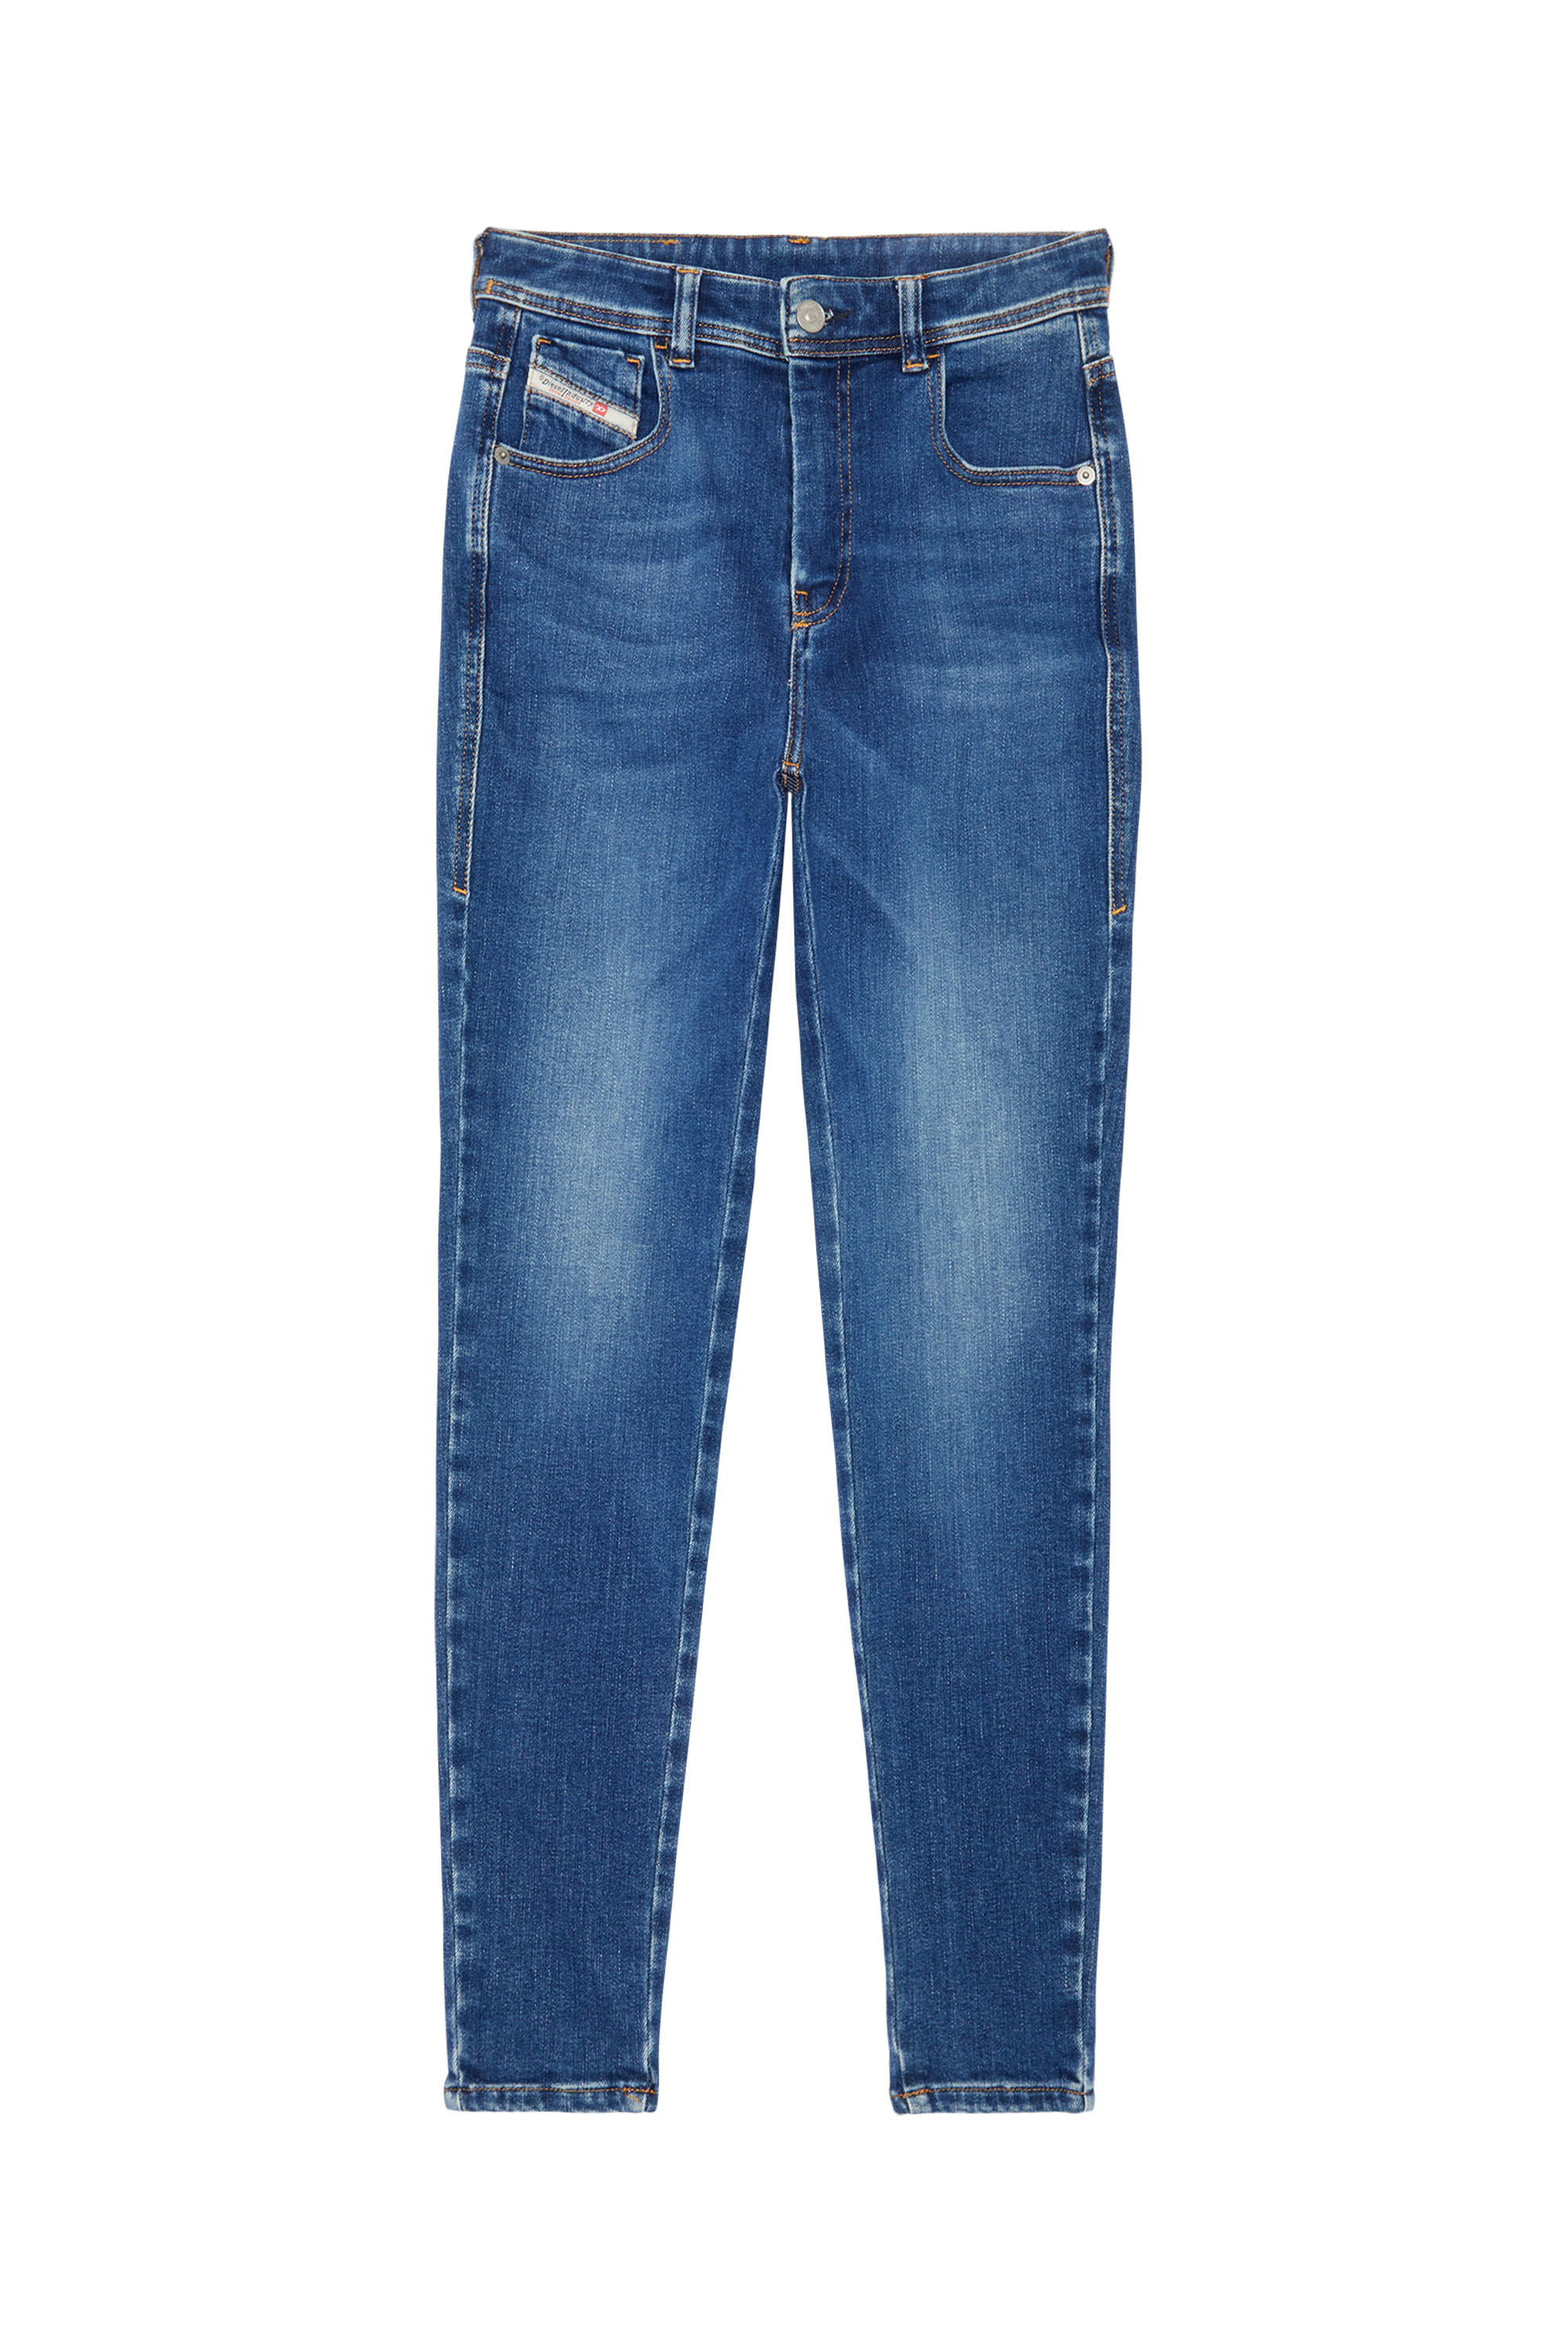 1984 SLANDY-HIGH 09C21 Super skinny Jeans, Dunkelblau - Jeans